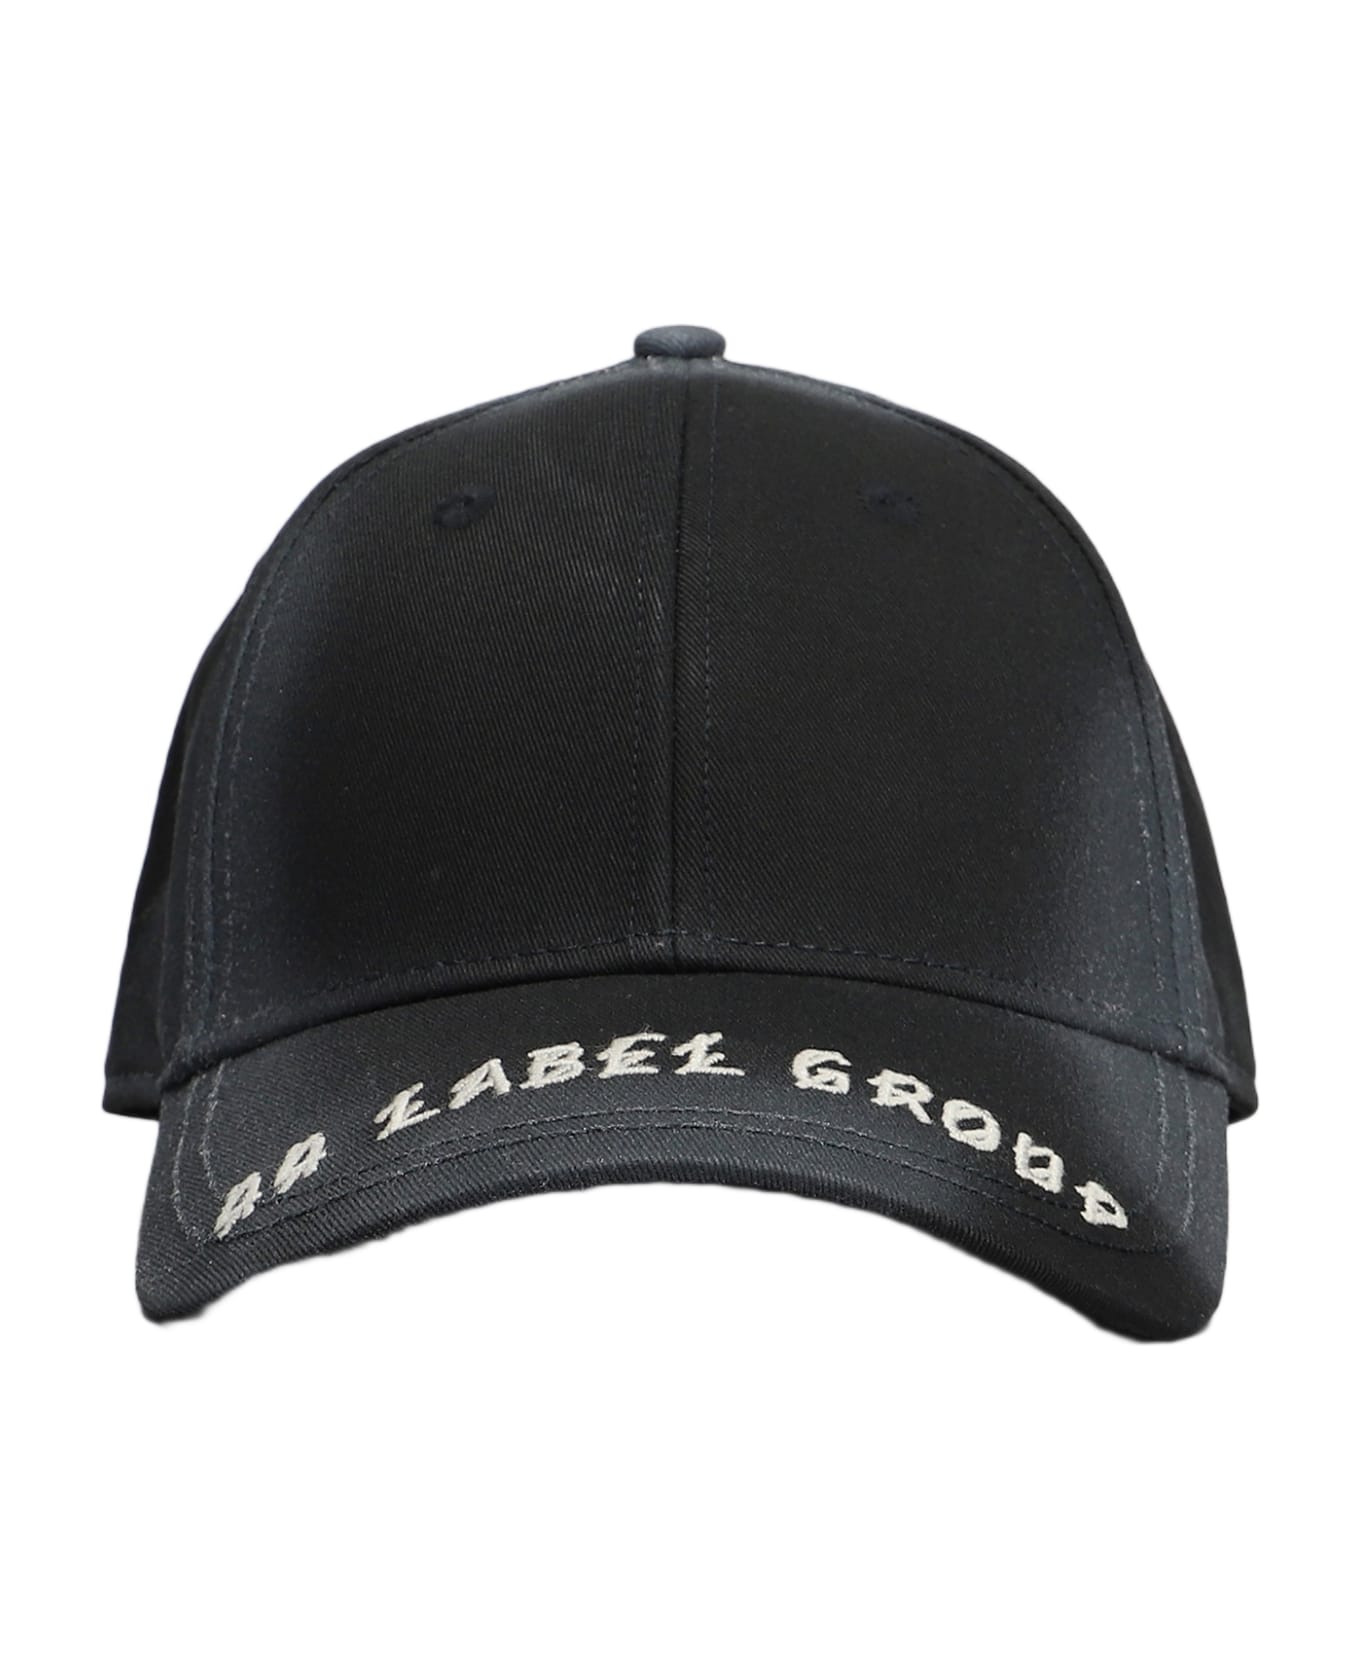 44 Label Group Hats In Black Cotton - black